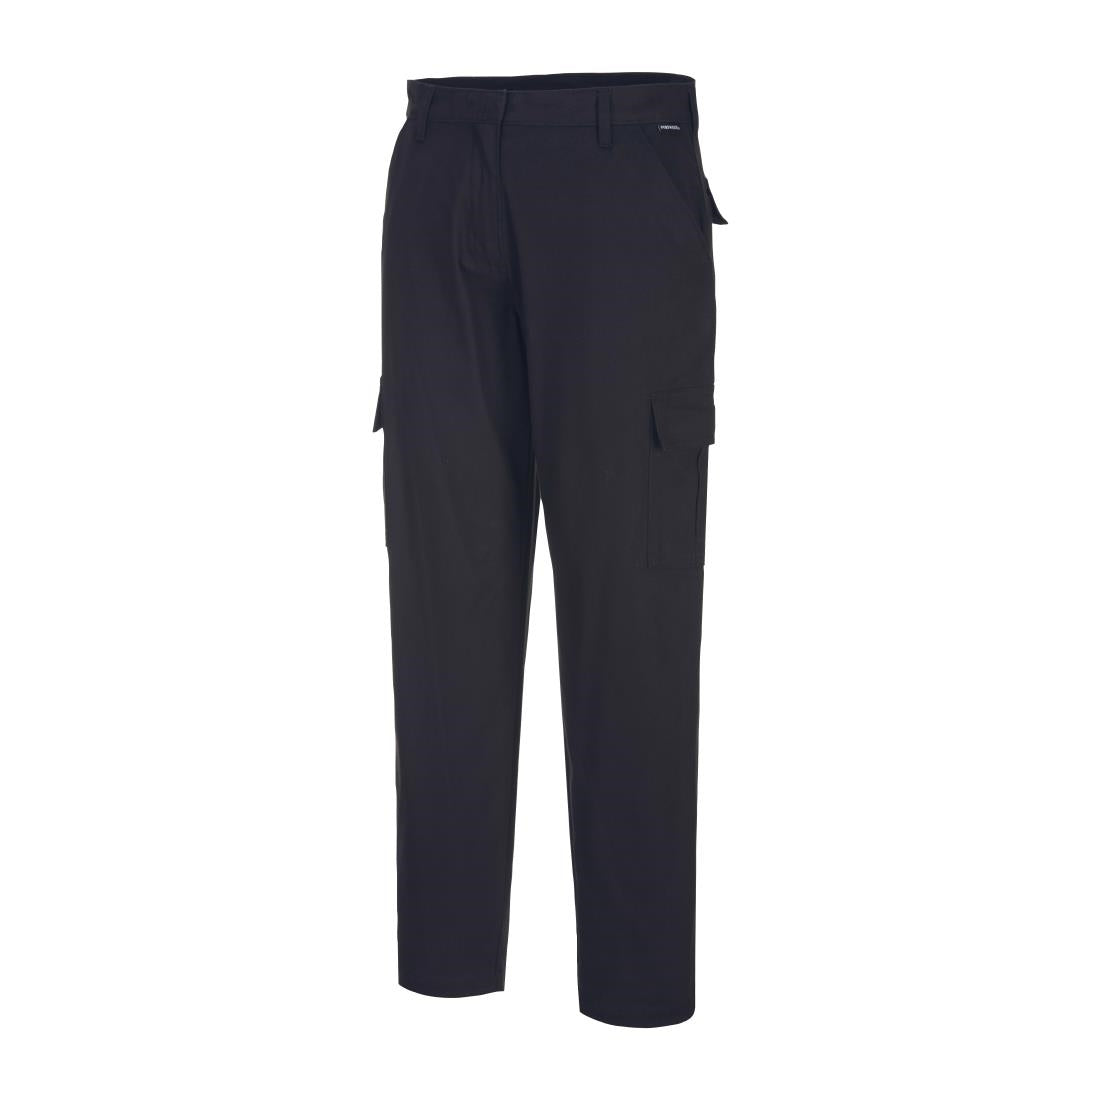 BA088-10 Portwest Eco Women's Stretch Cargo Trousers Black Size 10